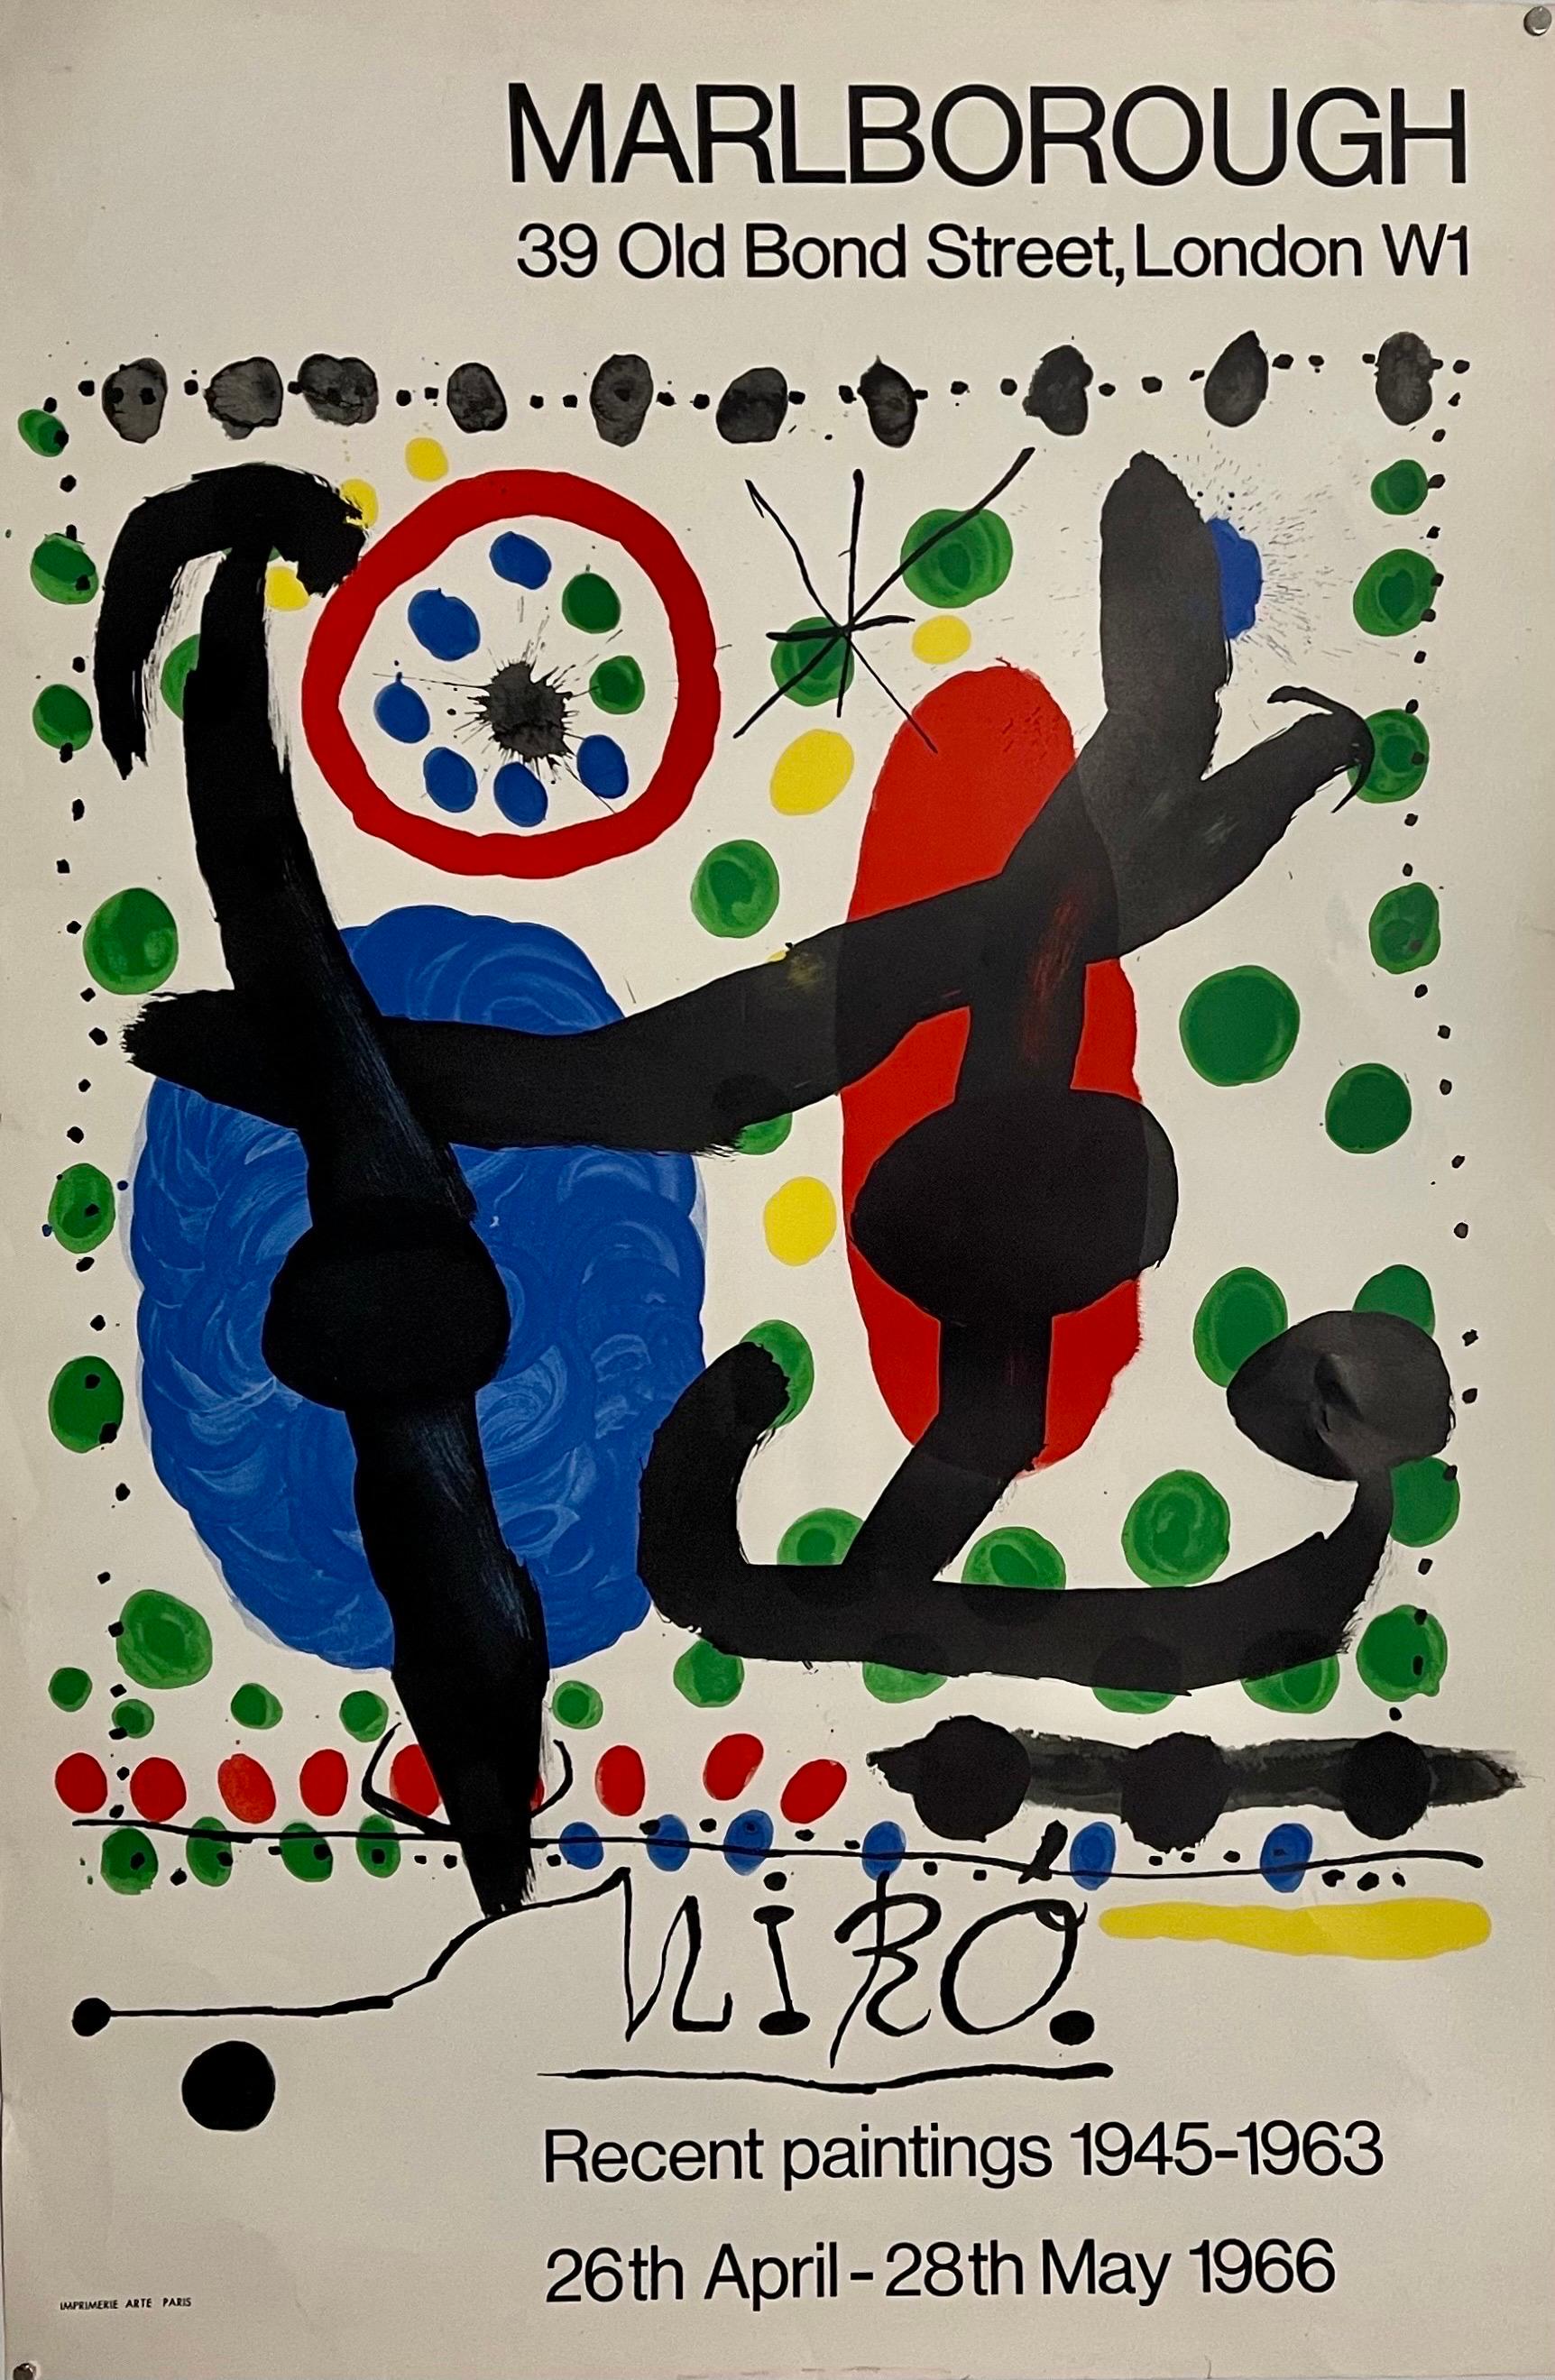 Joan Miró Abstract Print - Joan Miro Vintage Surrealist Lithograph Poster Adrien Maeght Paris London Show